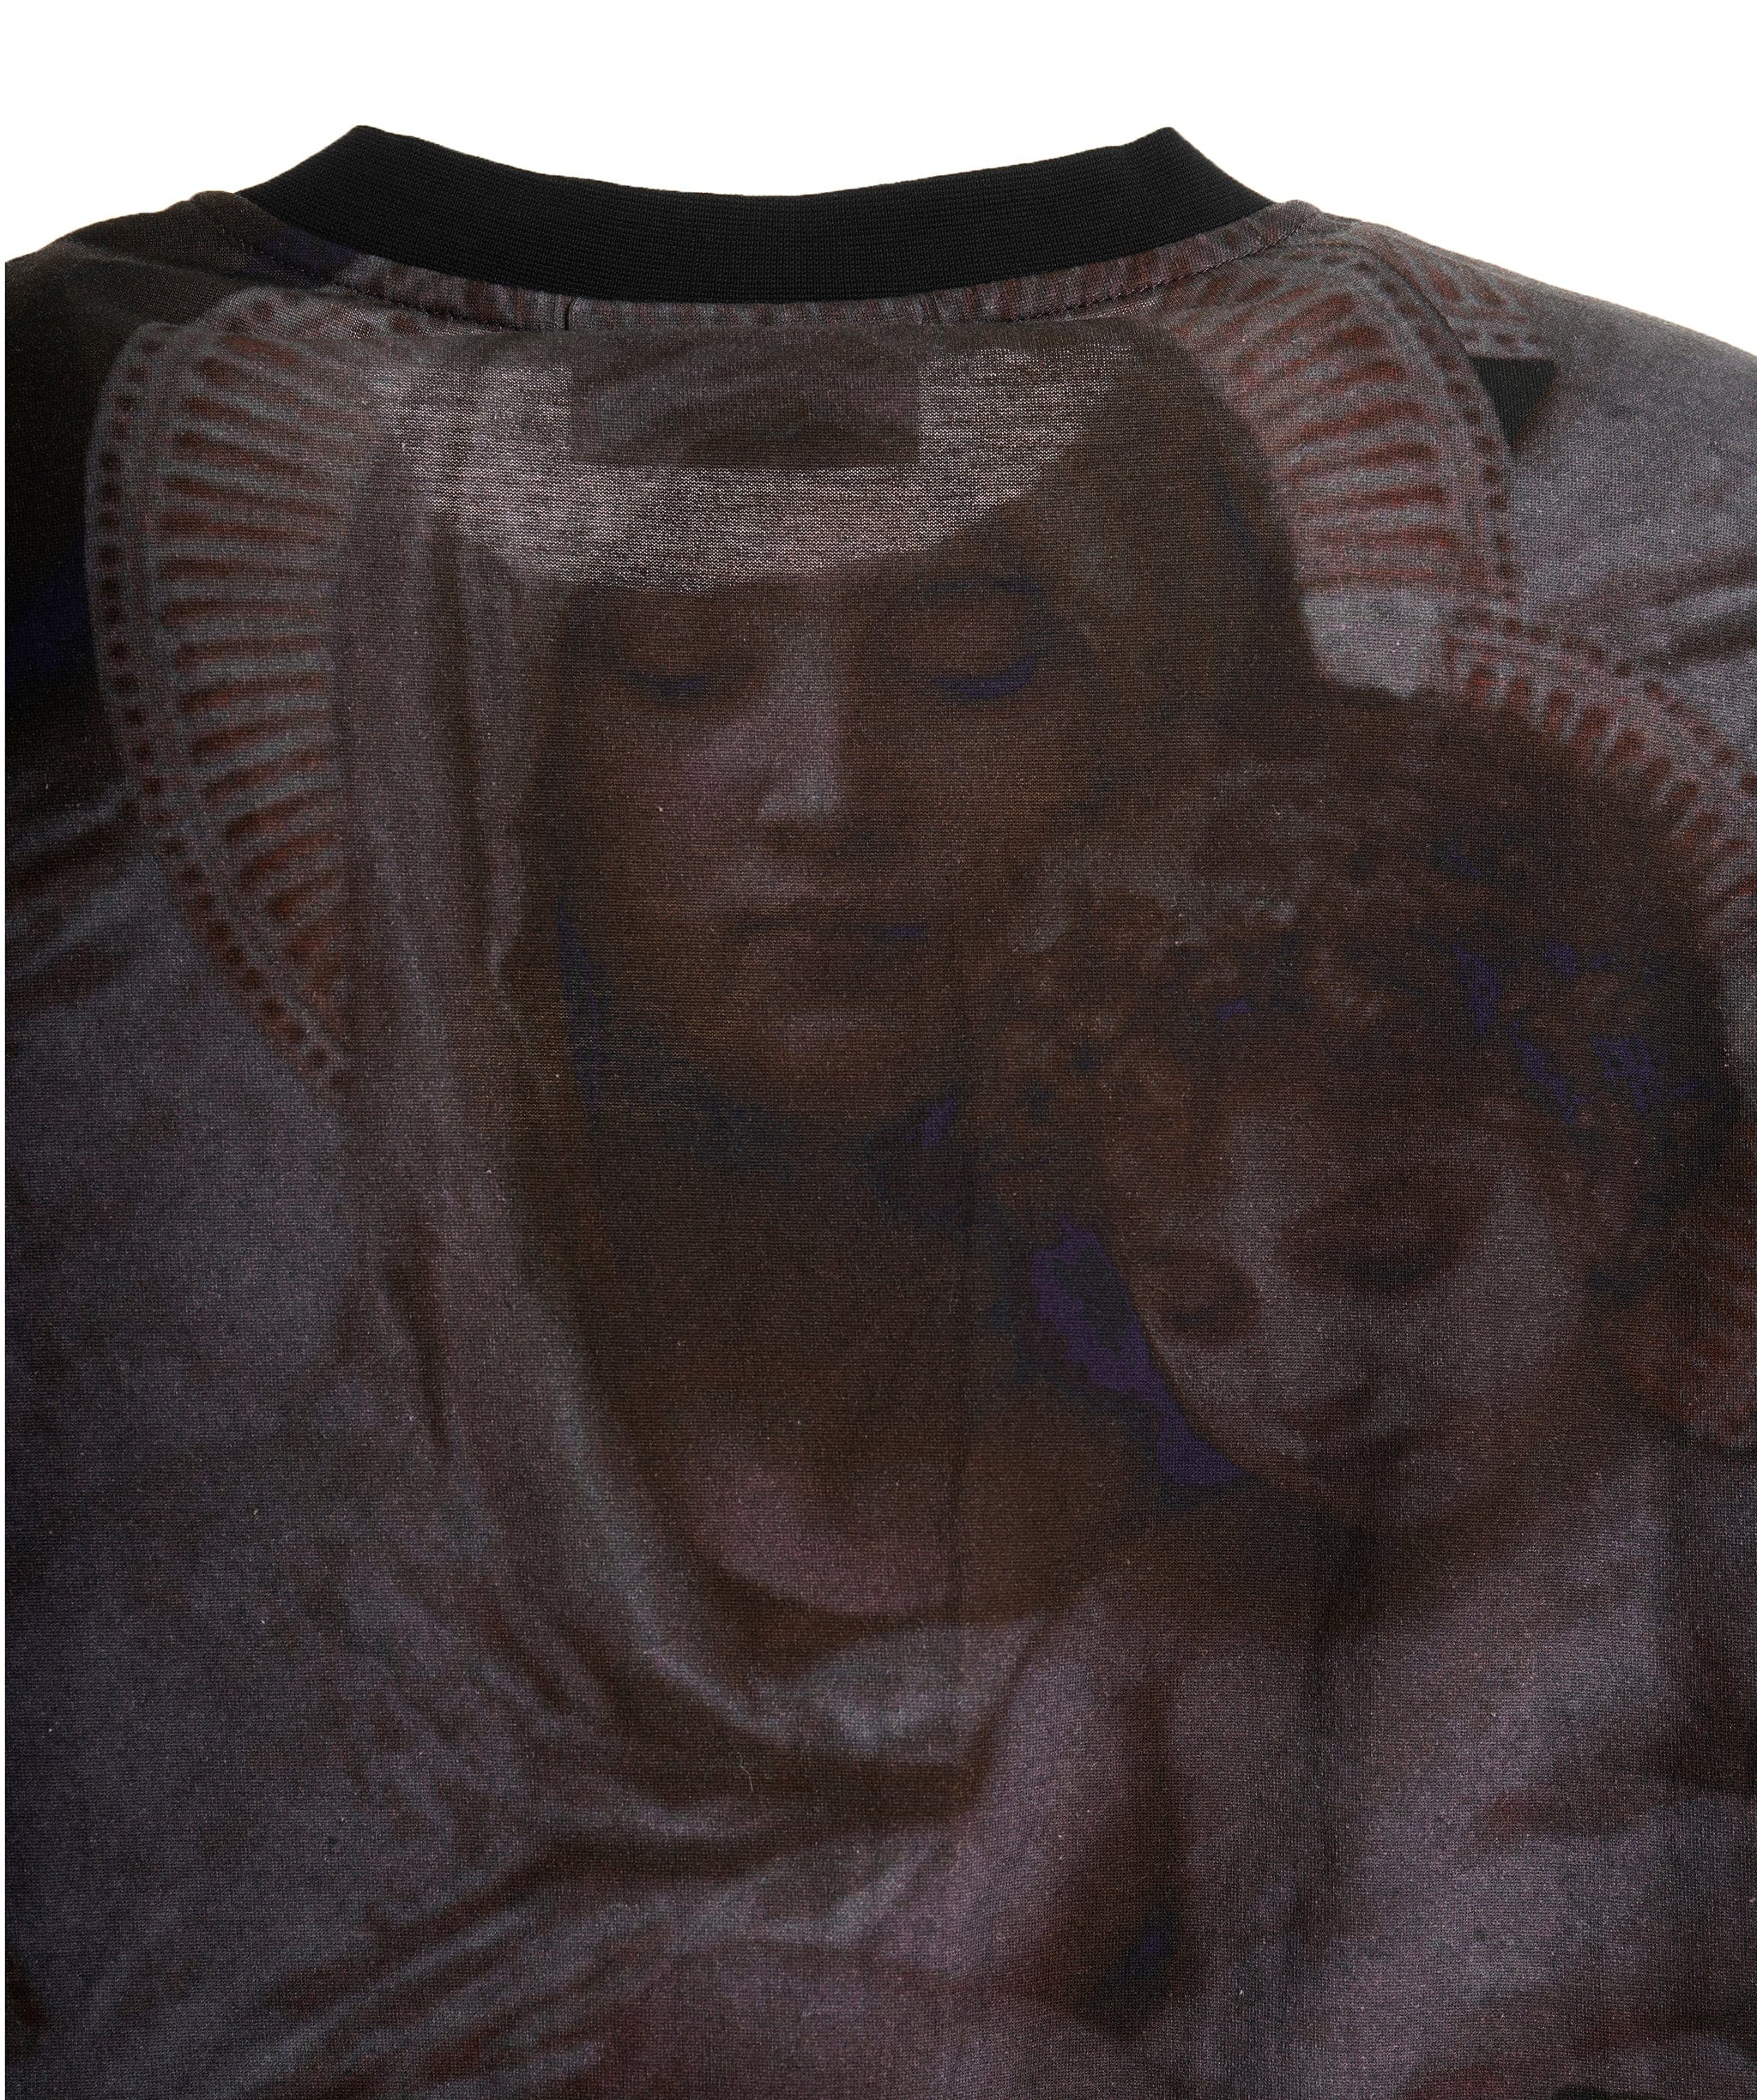 Givenchy Givenchy Madonna Print T-Shirt Size XL AVC1766